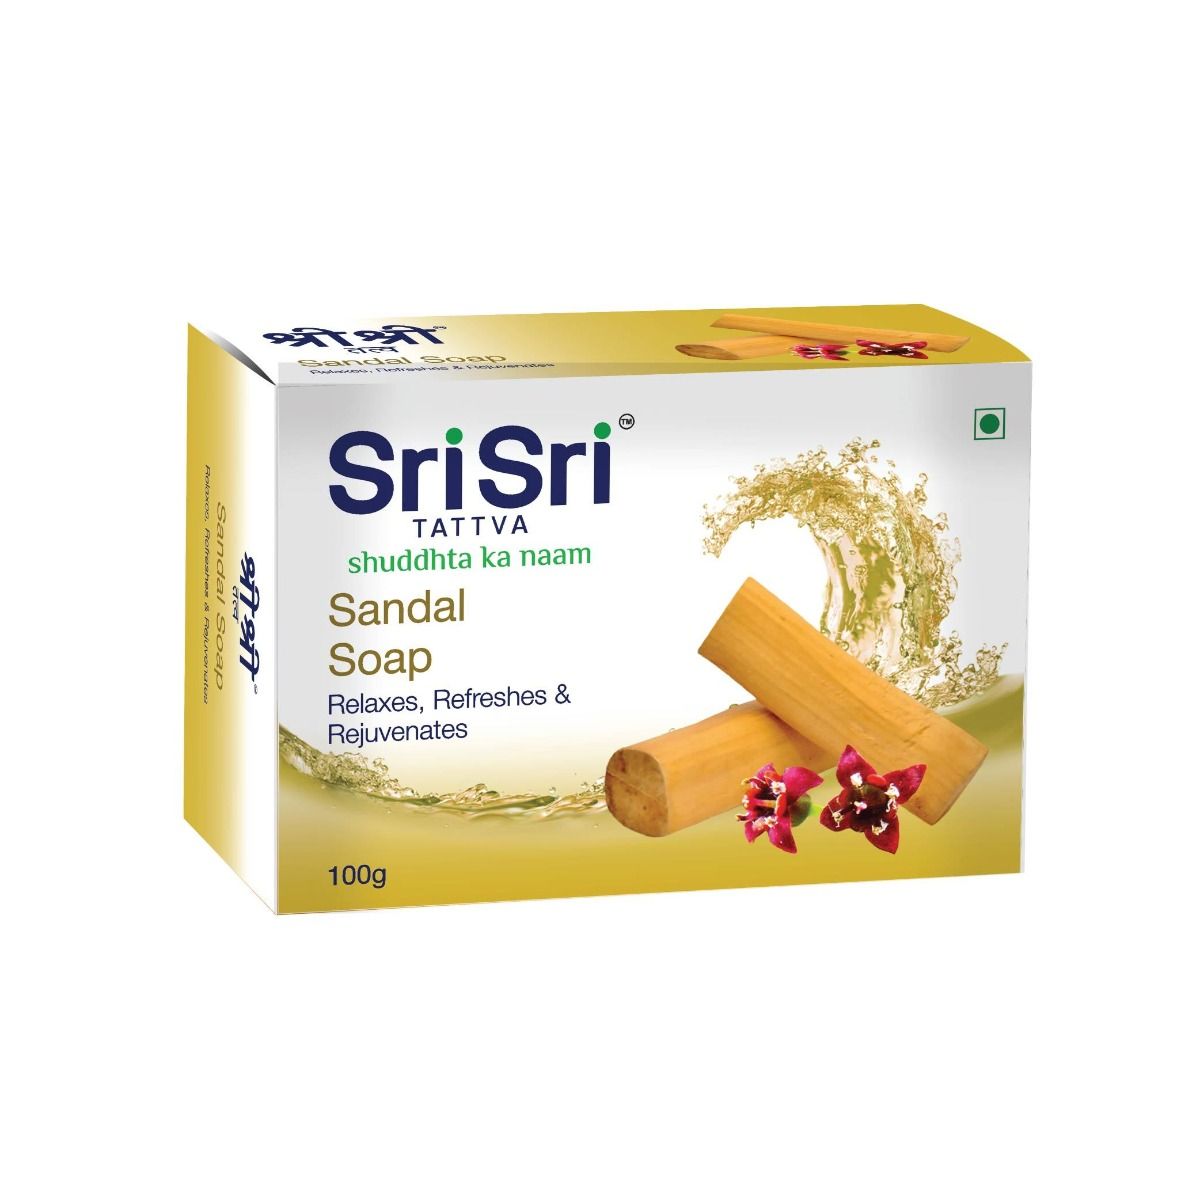 Sri Sri Tattva Sandal Soap, 100 gm, Pack of 1 